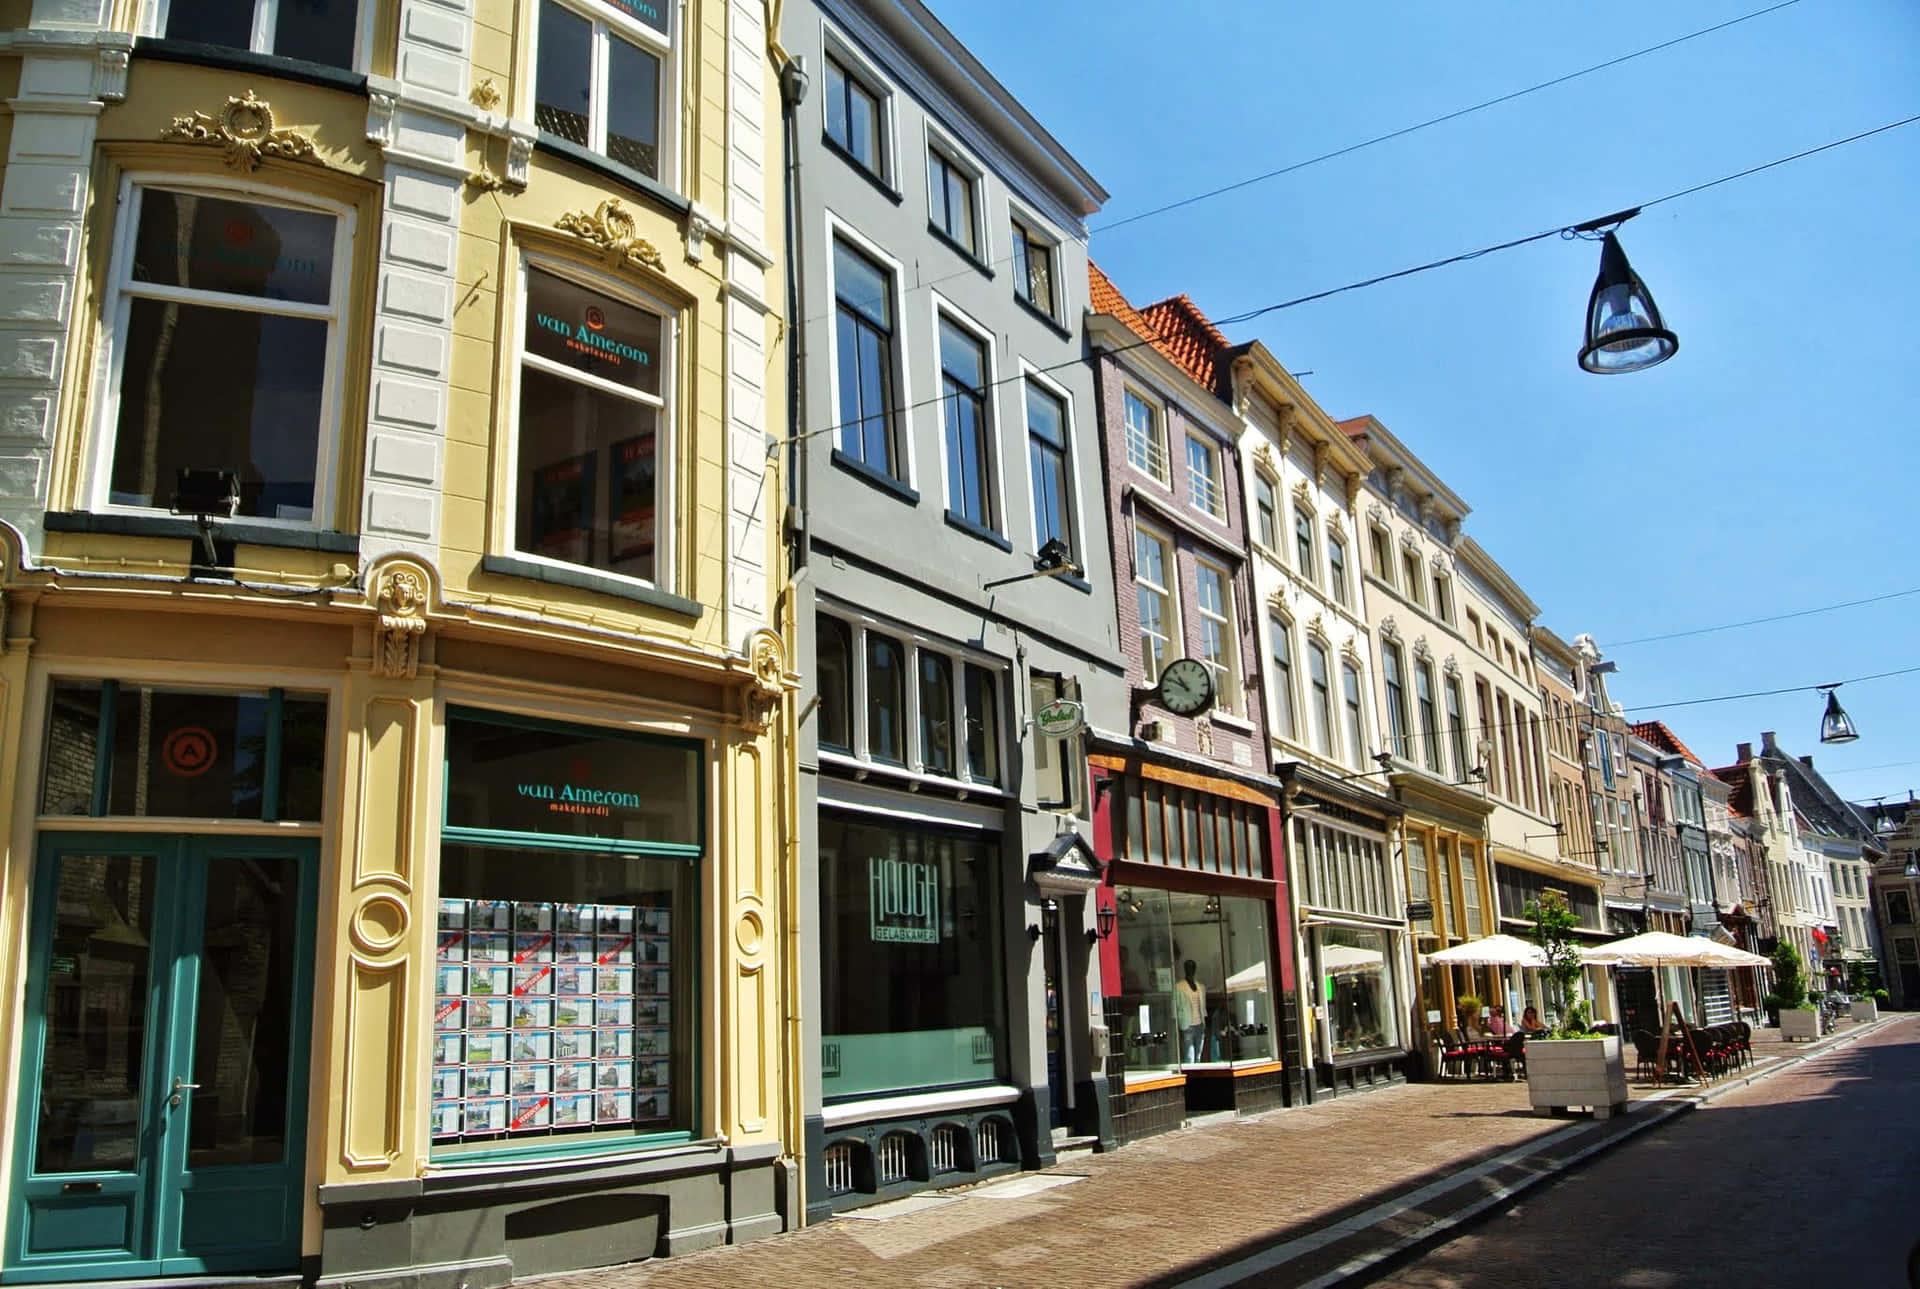 Zwolle Historic Street View Wallpaper